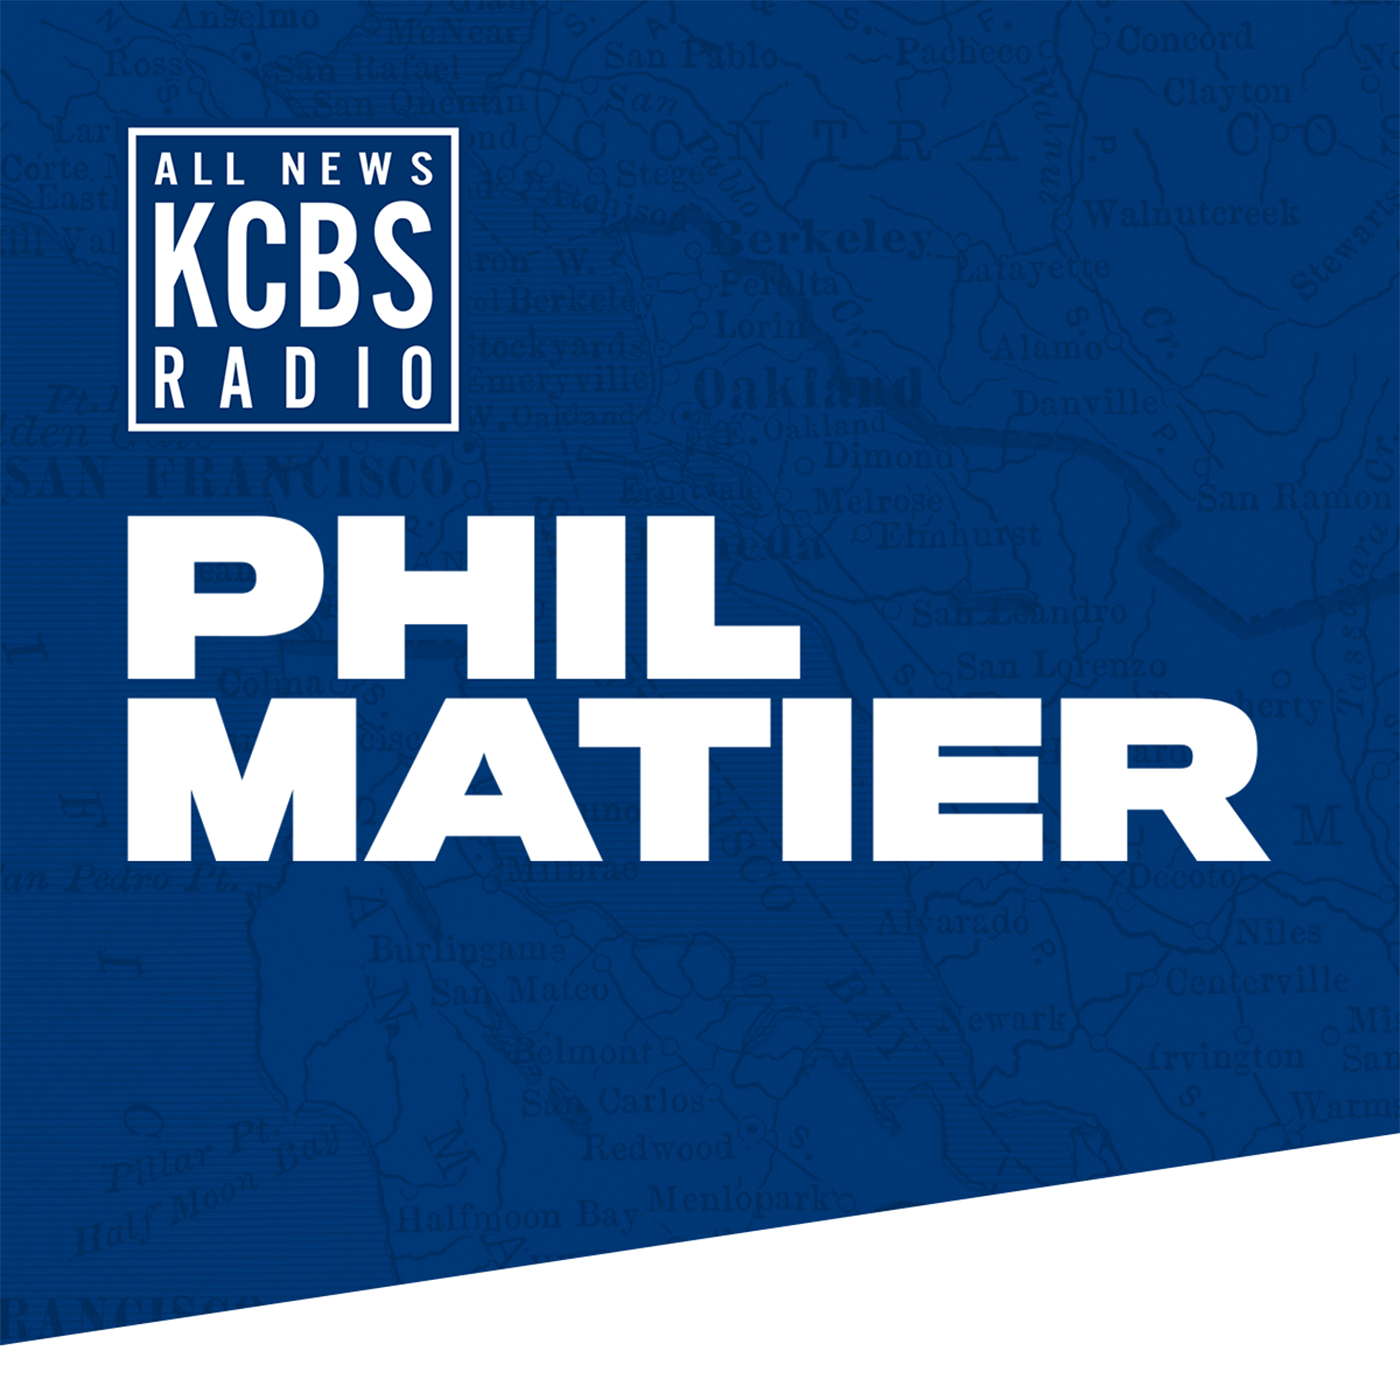 Phil Matier: Looking ahead at tonight's Vice Presidential debate